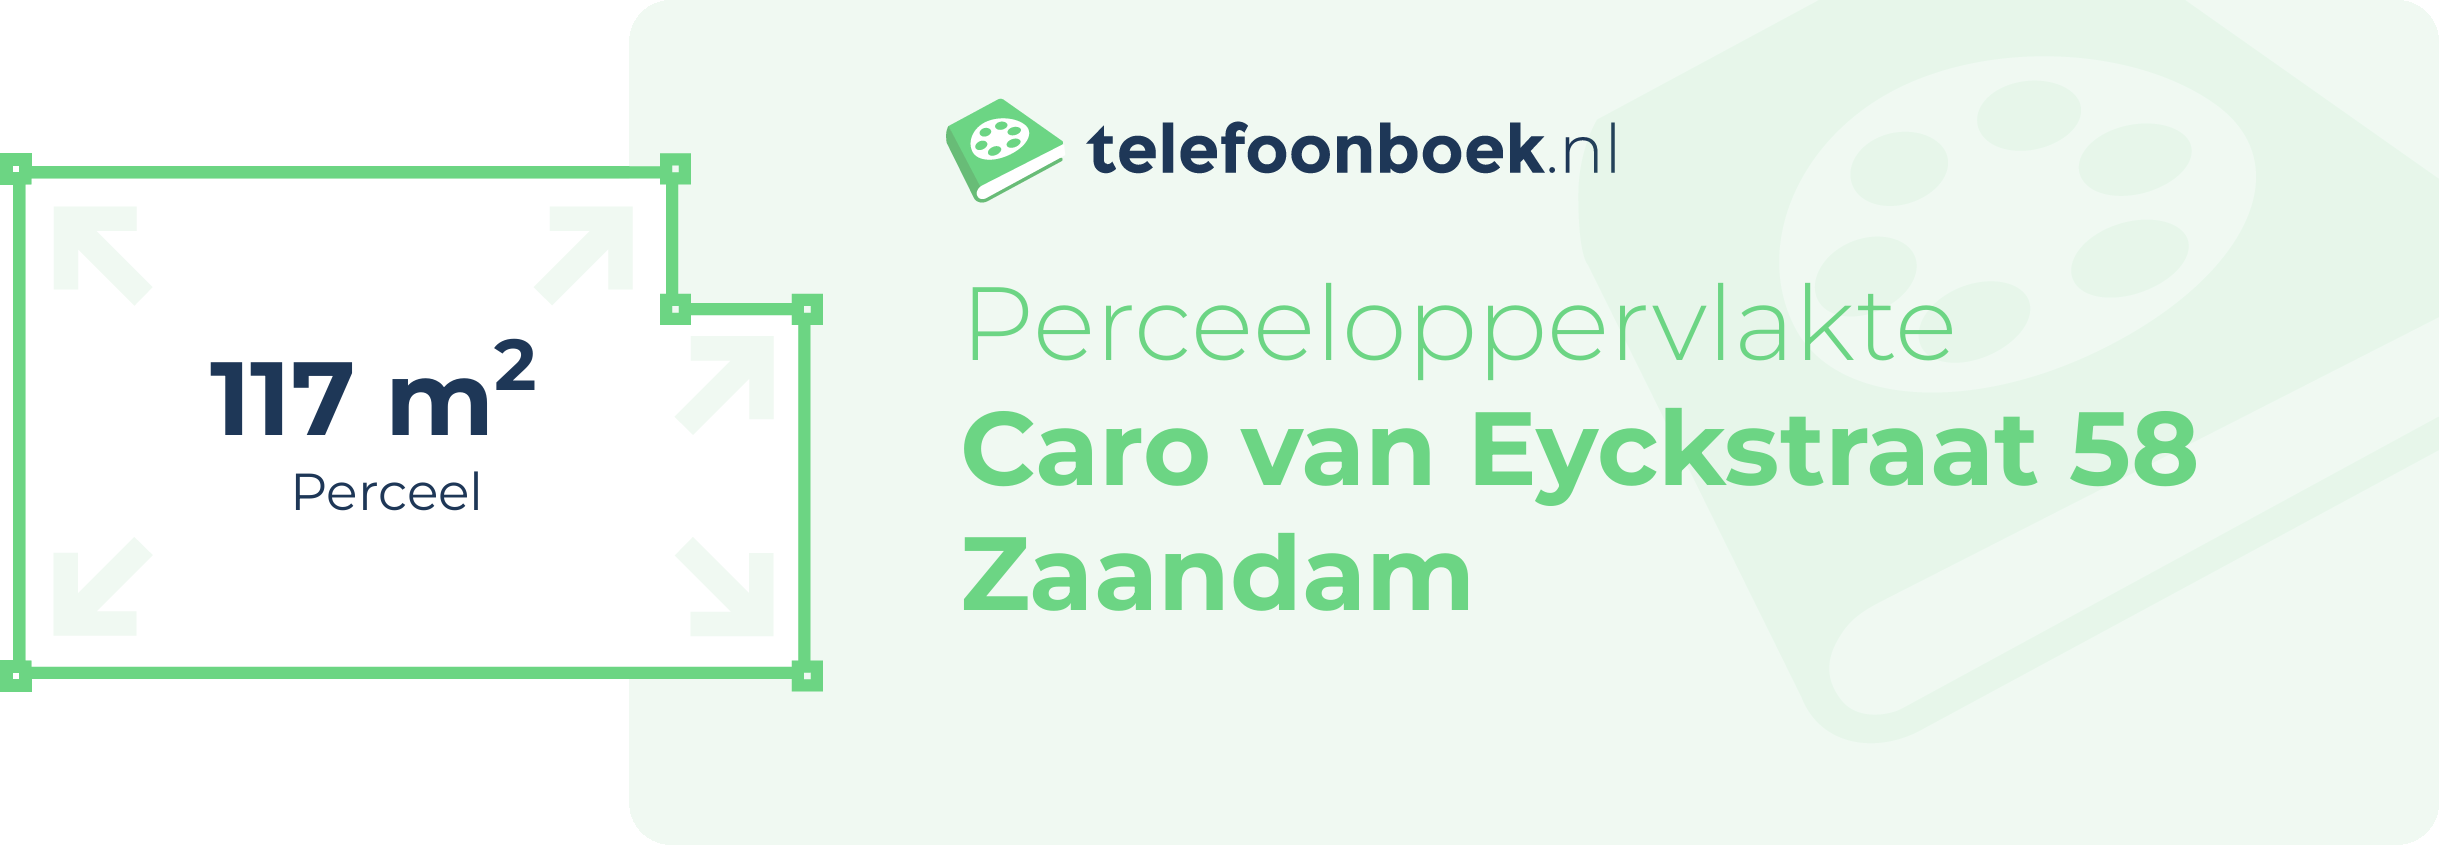 Perceeloppervlakte Caro Van Eyckstraat 58 Zaandam